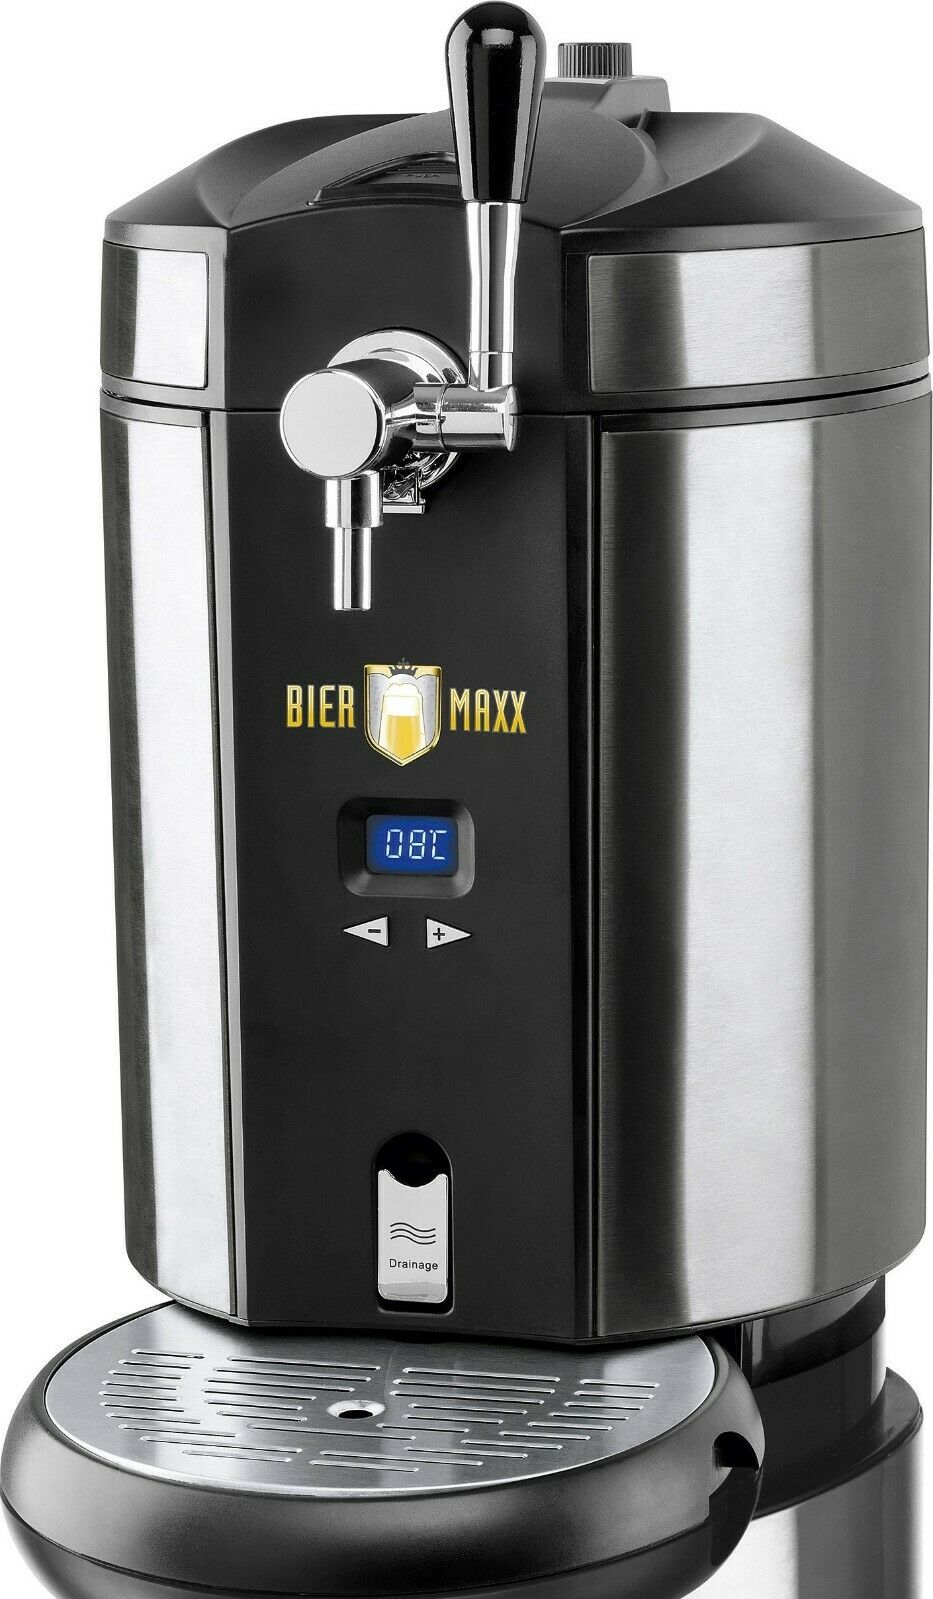 Beer dispenser Seals(3)for royal catering, Klarstein machines UK STOCK